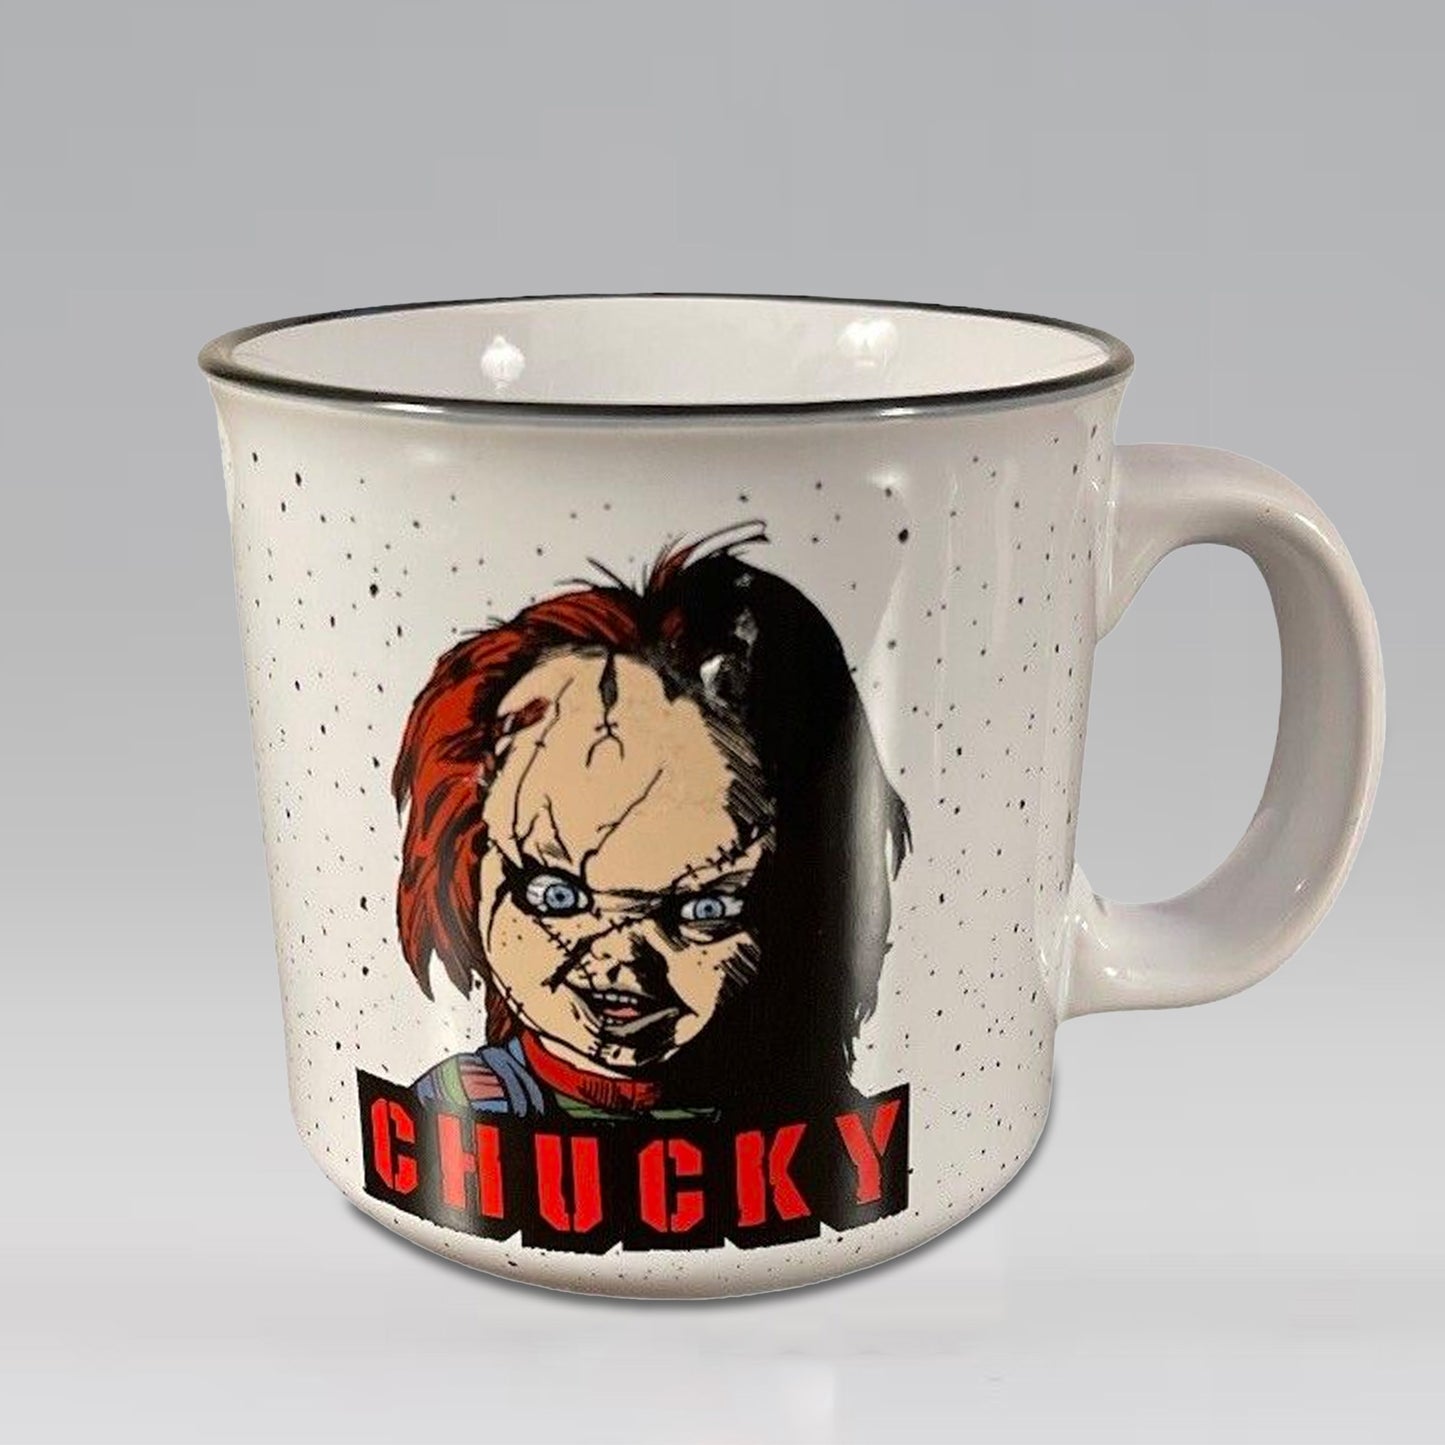 Chucky (Child's Play) "Wanna Play" 20 oz. Camper Mug